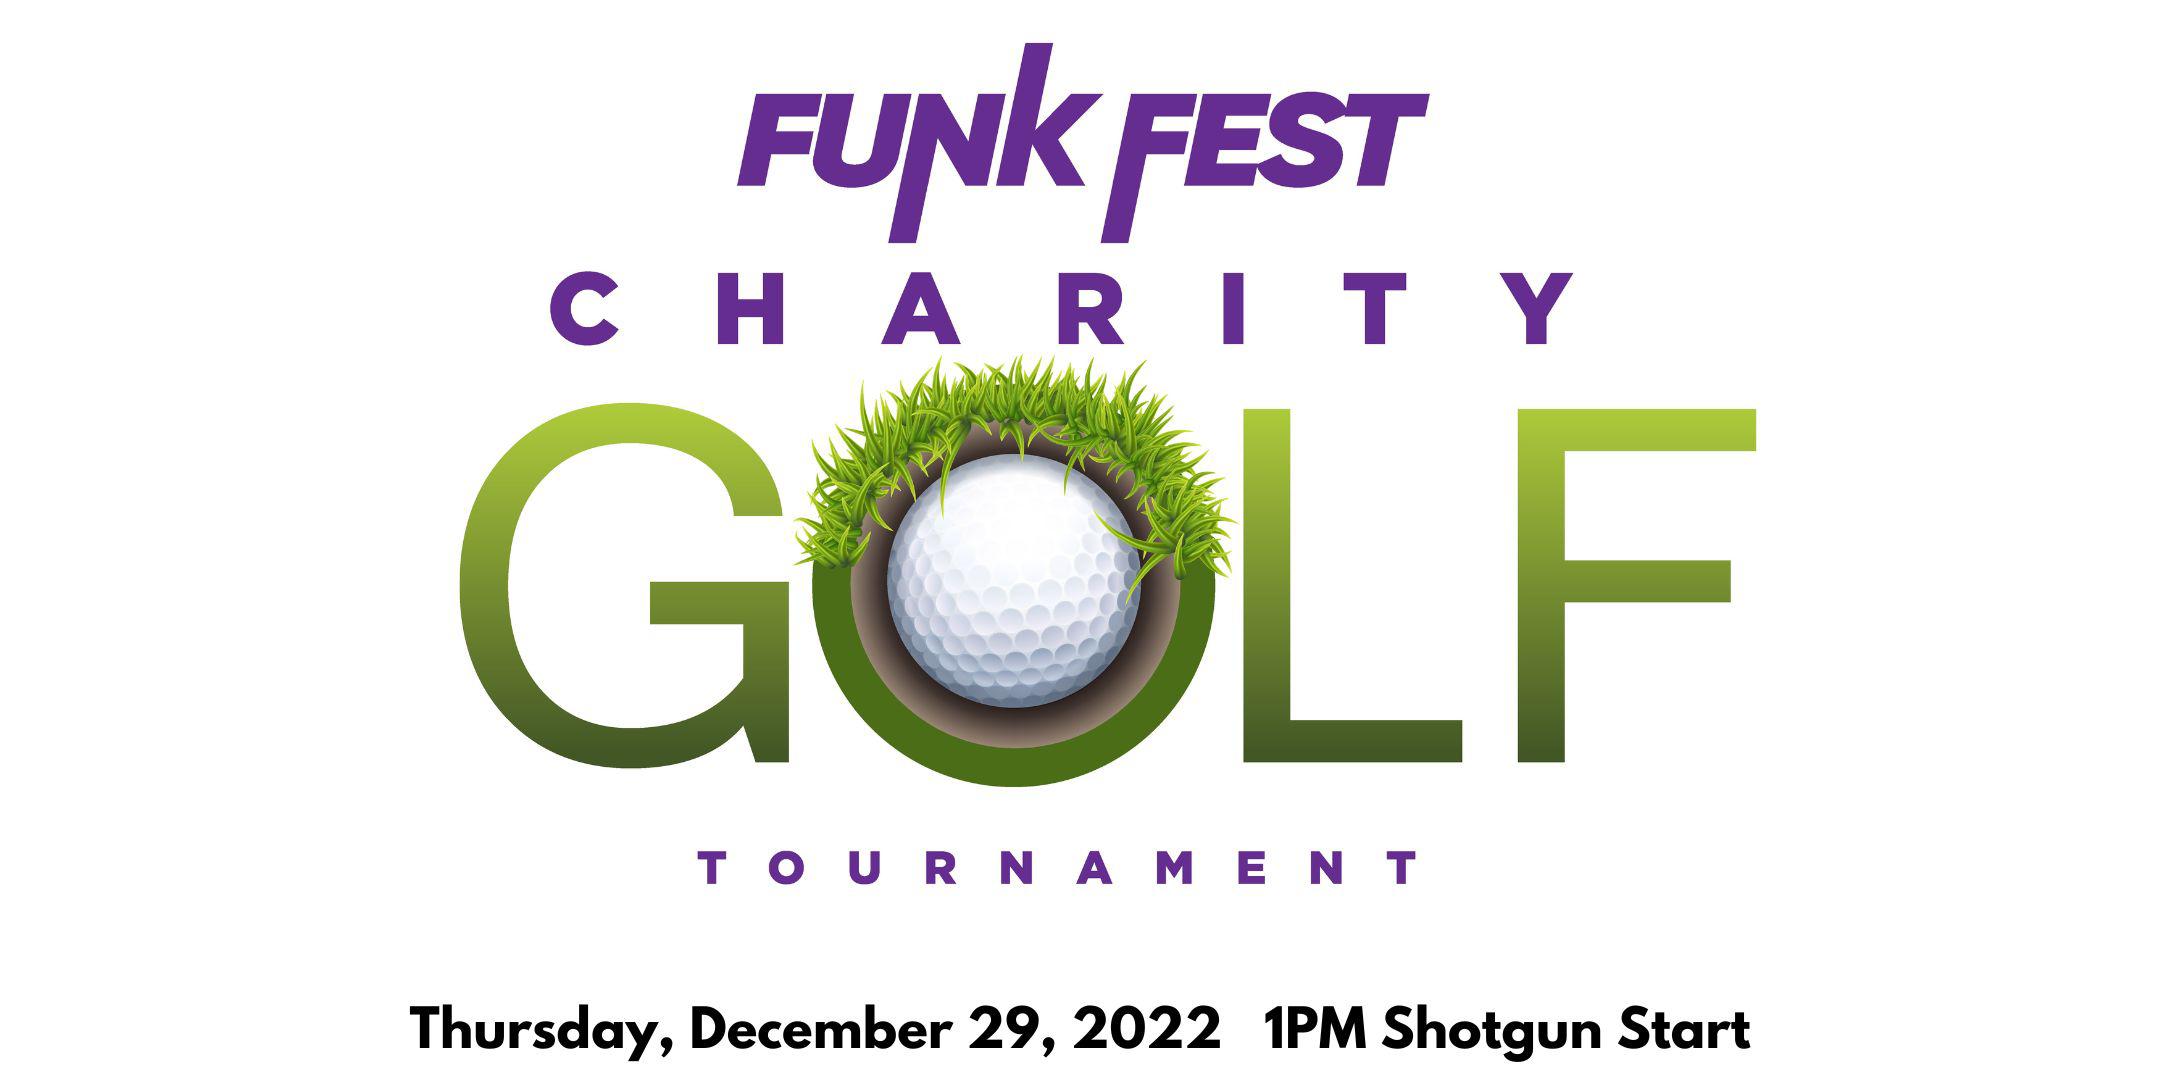 Funkfest Charity Golf Tournament